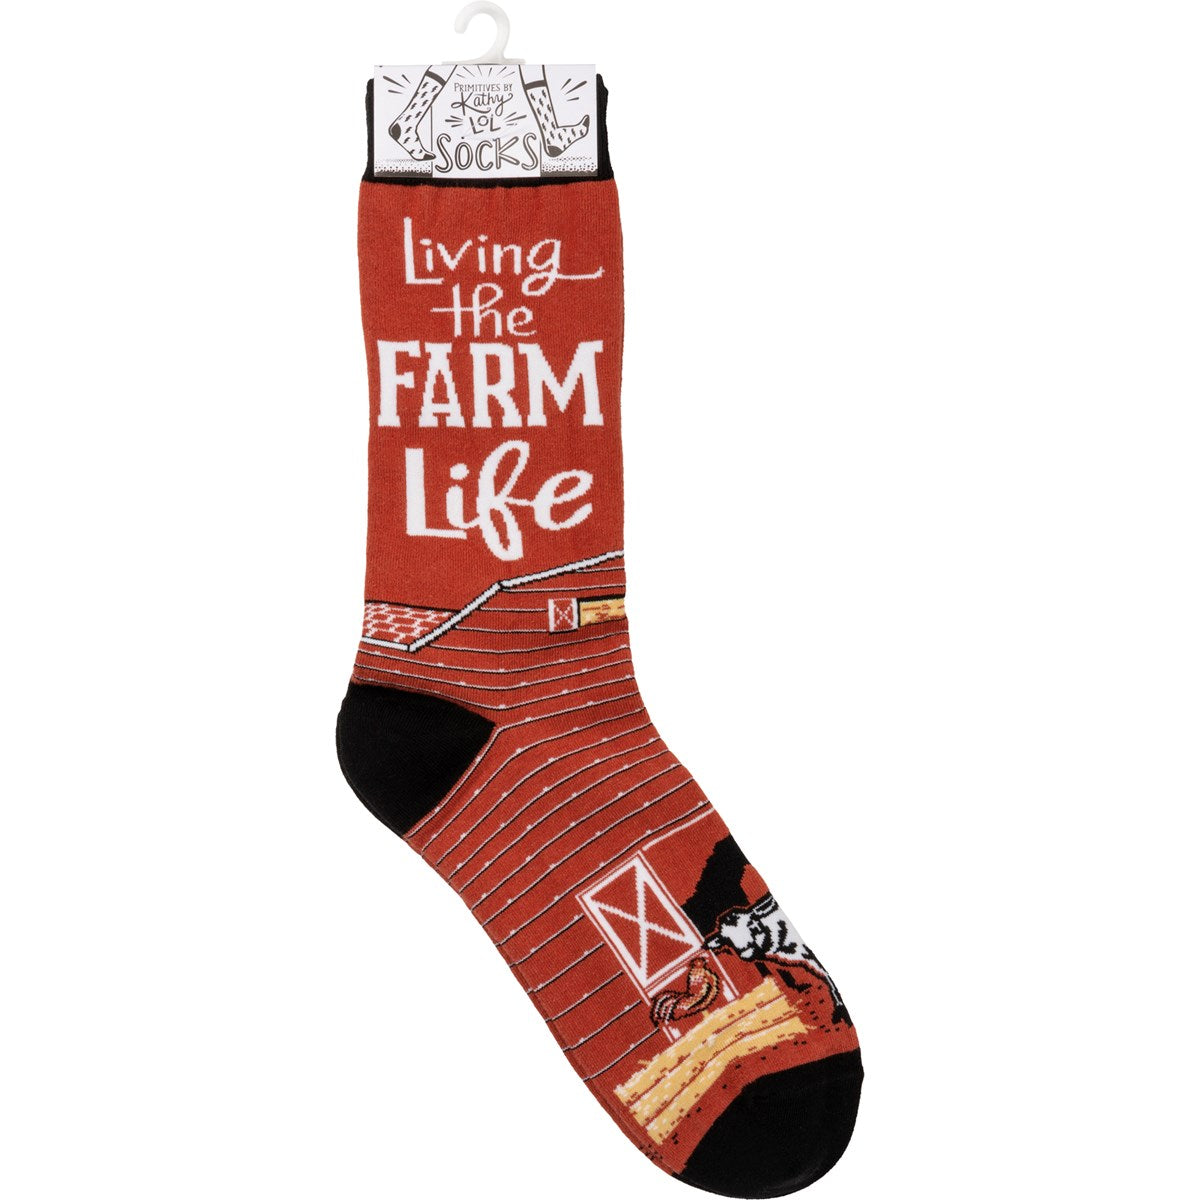 Living The Farm Life Novelty Socks